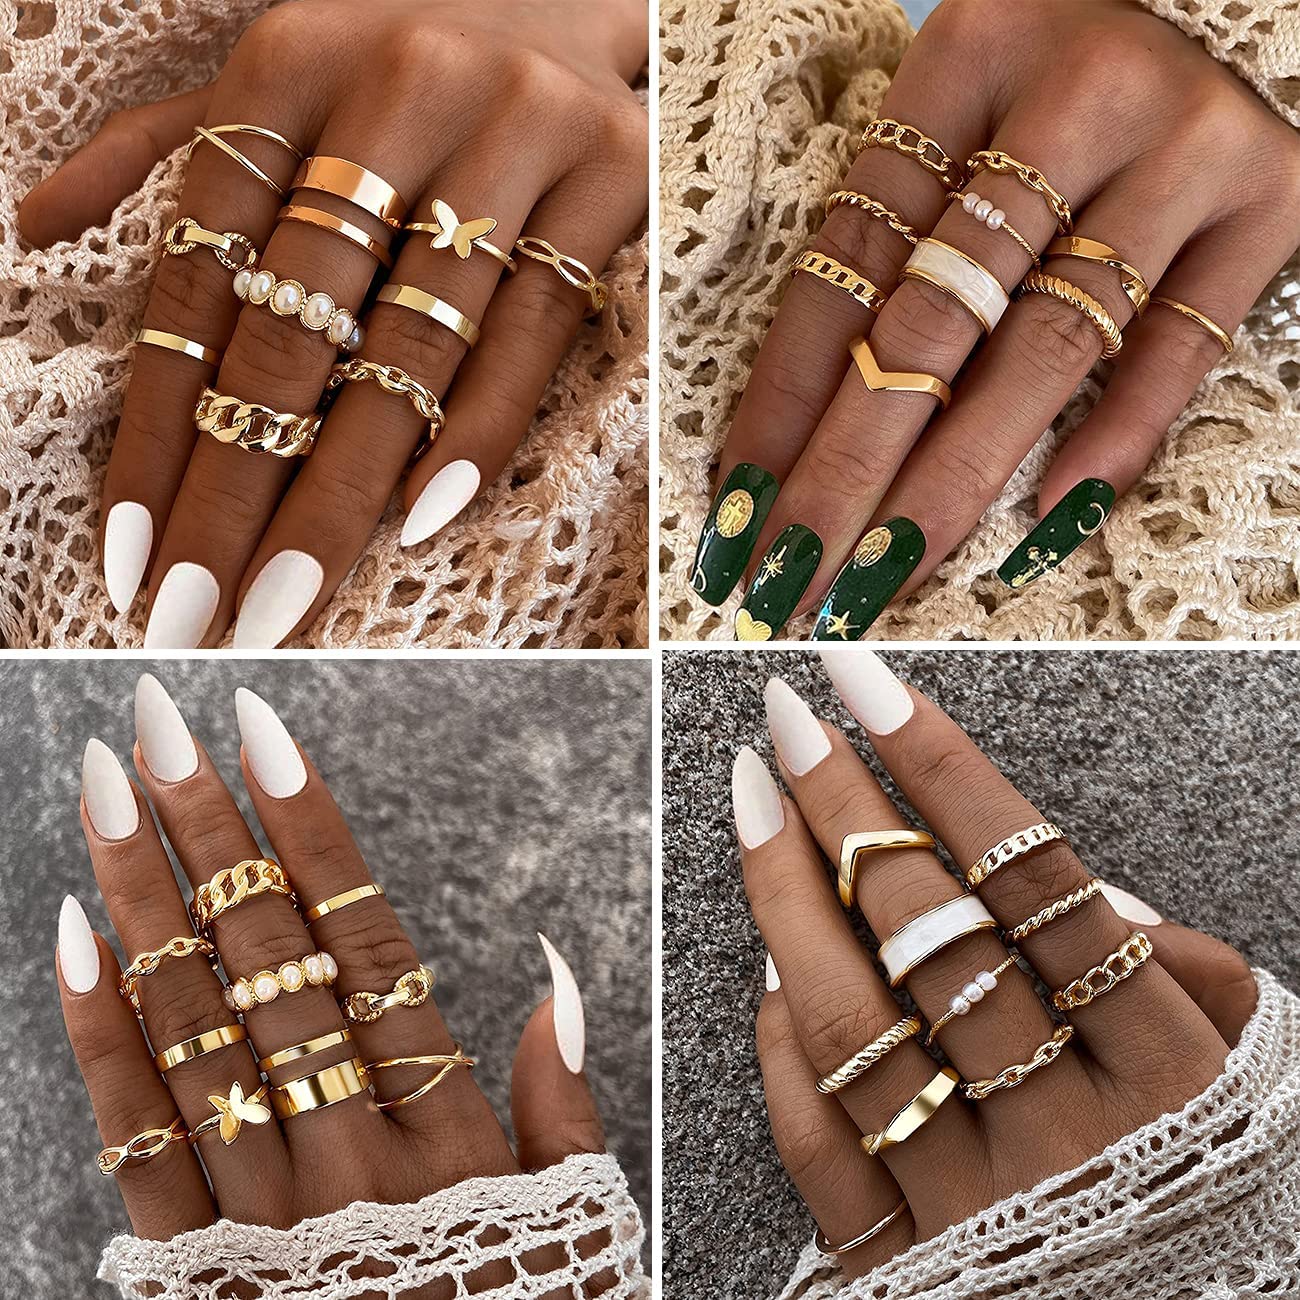 30 Pcs Vintage Gold Knuckle Rings Set, Boho Butterfly Snake Stackable Finger Rings for Women Girls, Silver Midi Rings Pack